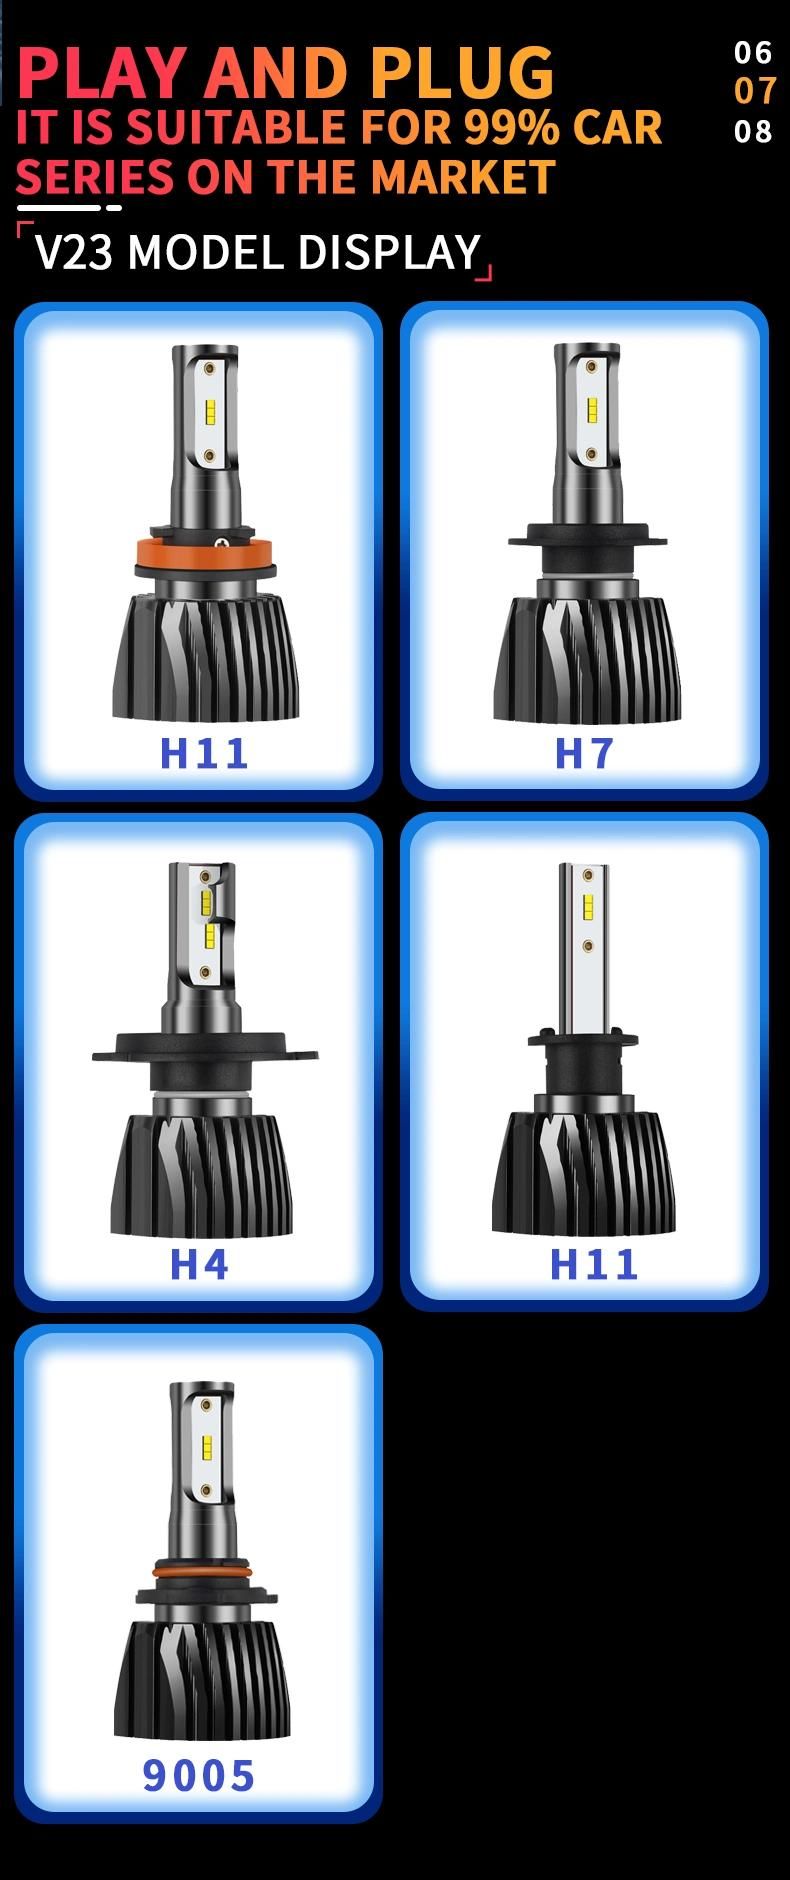 V23 Hot Selling LED Motorcycle Headlight Without Fan 5500lm 6000K Car LED Headlights Automotive H11 LED Headlight